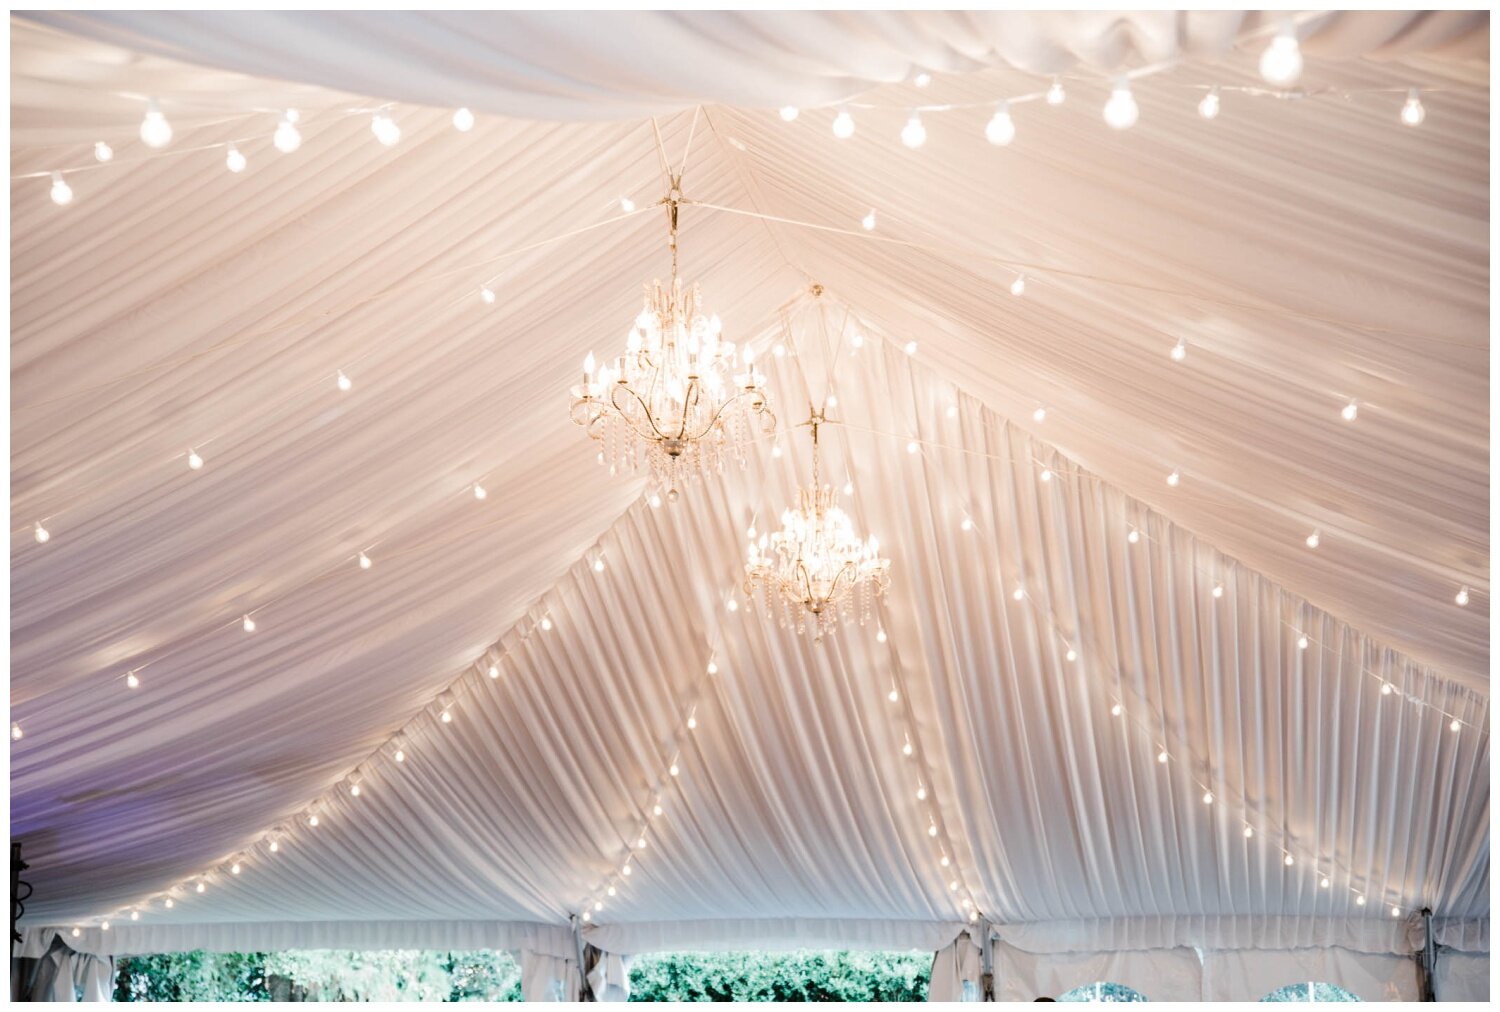 Birkby House Wedding reception tent ceiling decor